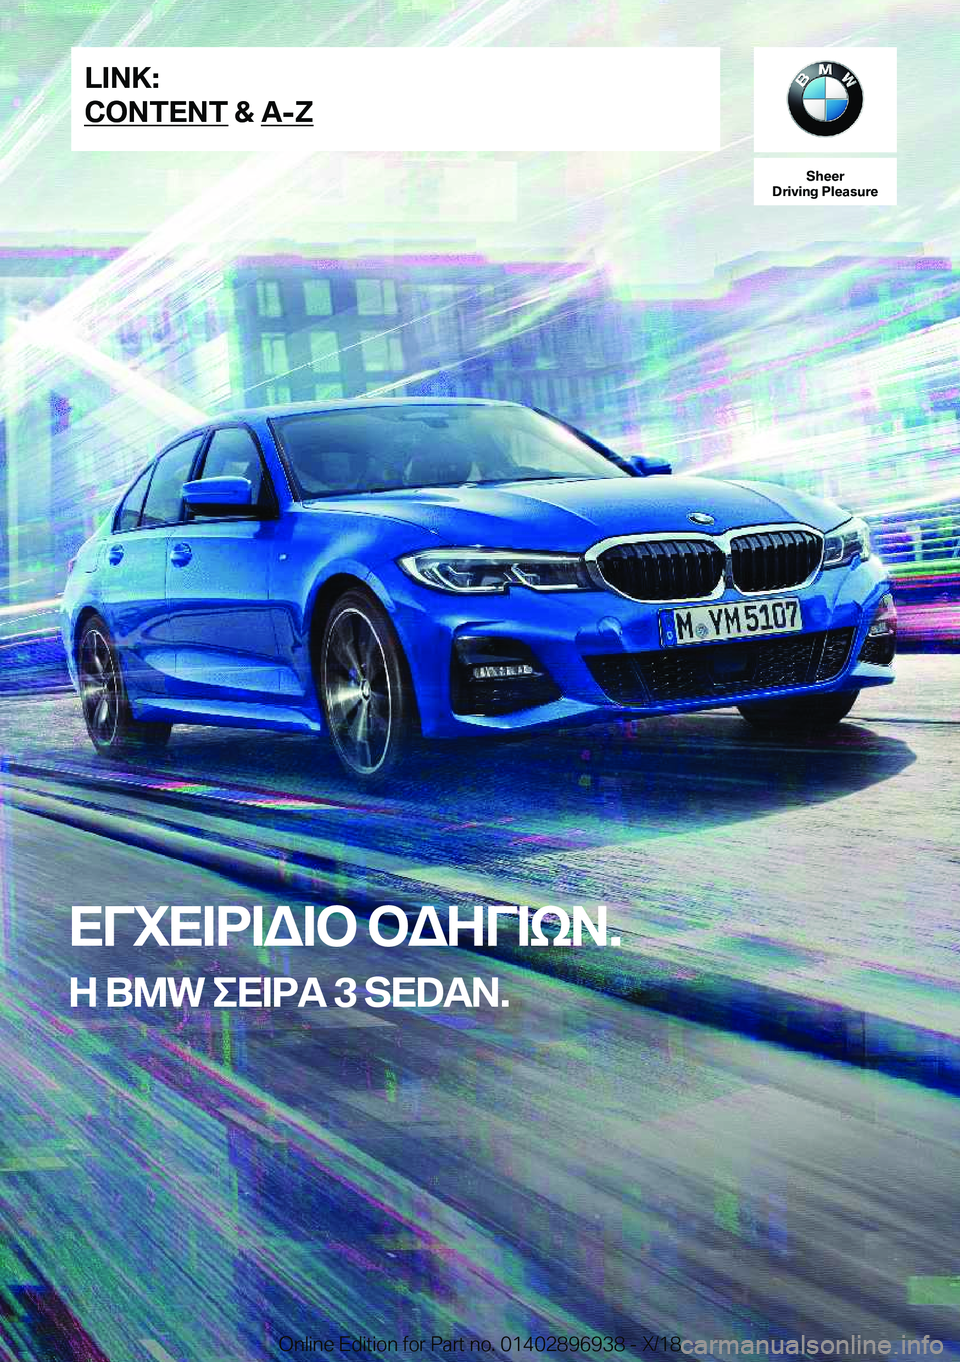 BMW 3 SERIES 2019  ΟΔΗΓΌΣ ΧΡΉΣΗΣ (in Greek) �S�h�e�e�r
�D�r�i�v�i�n�g��P�l�e�a�s�u�r�e
XViX=d=W=b�bWZV=kA�.
�H��B�M�W�eX=dT��3��S�E�D�A�N�.�L�I�N�K�:
�C�O�N�T�E�N�T��&��A�-�Z�O�n�l�i�n�e��E�d�i�t�i�o�n��f�o�r��P